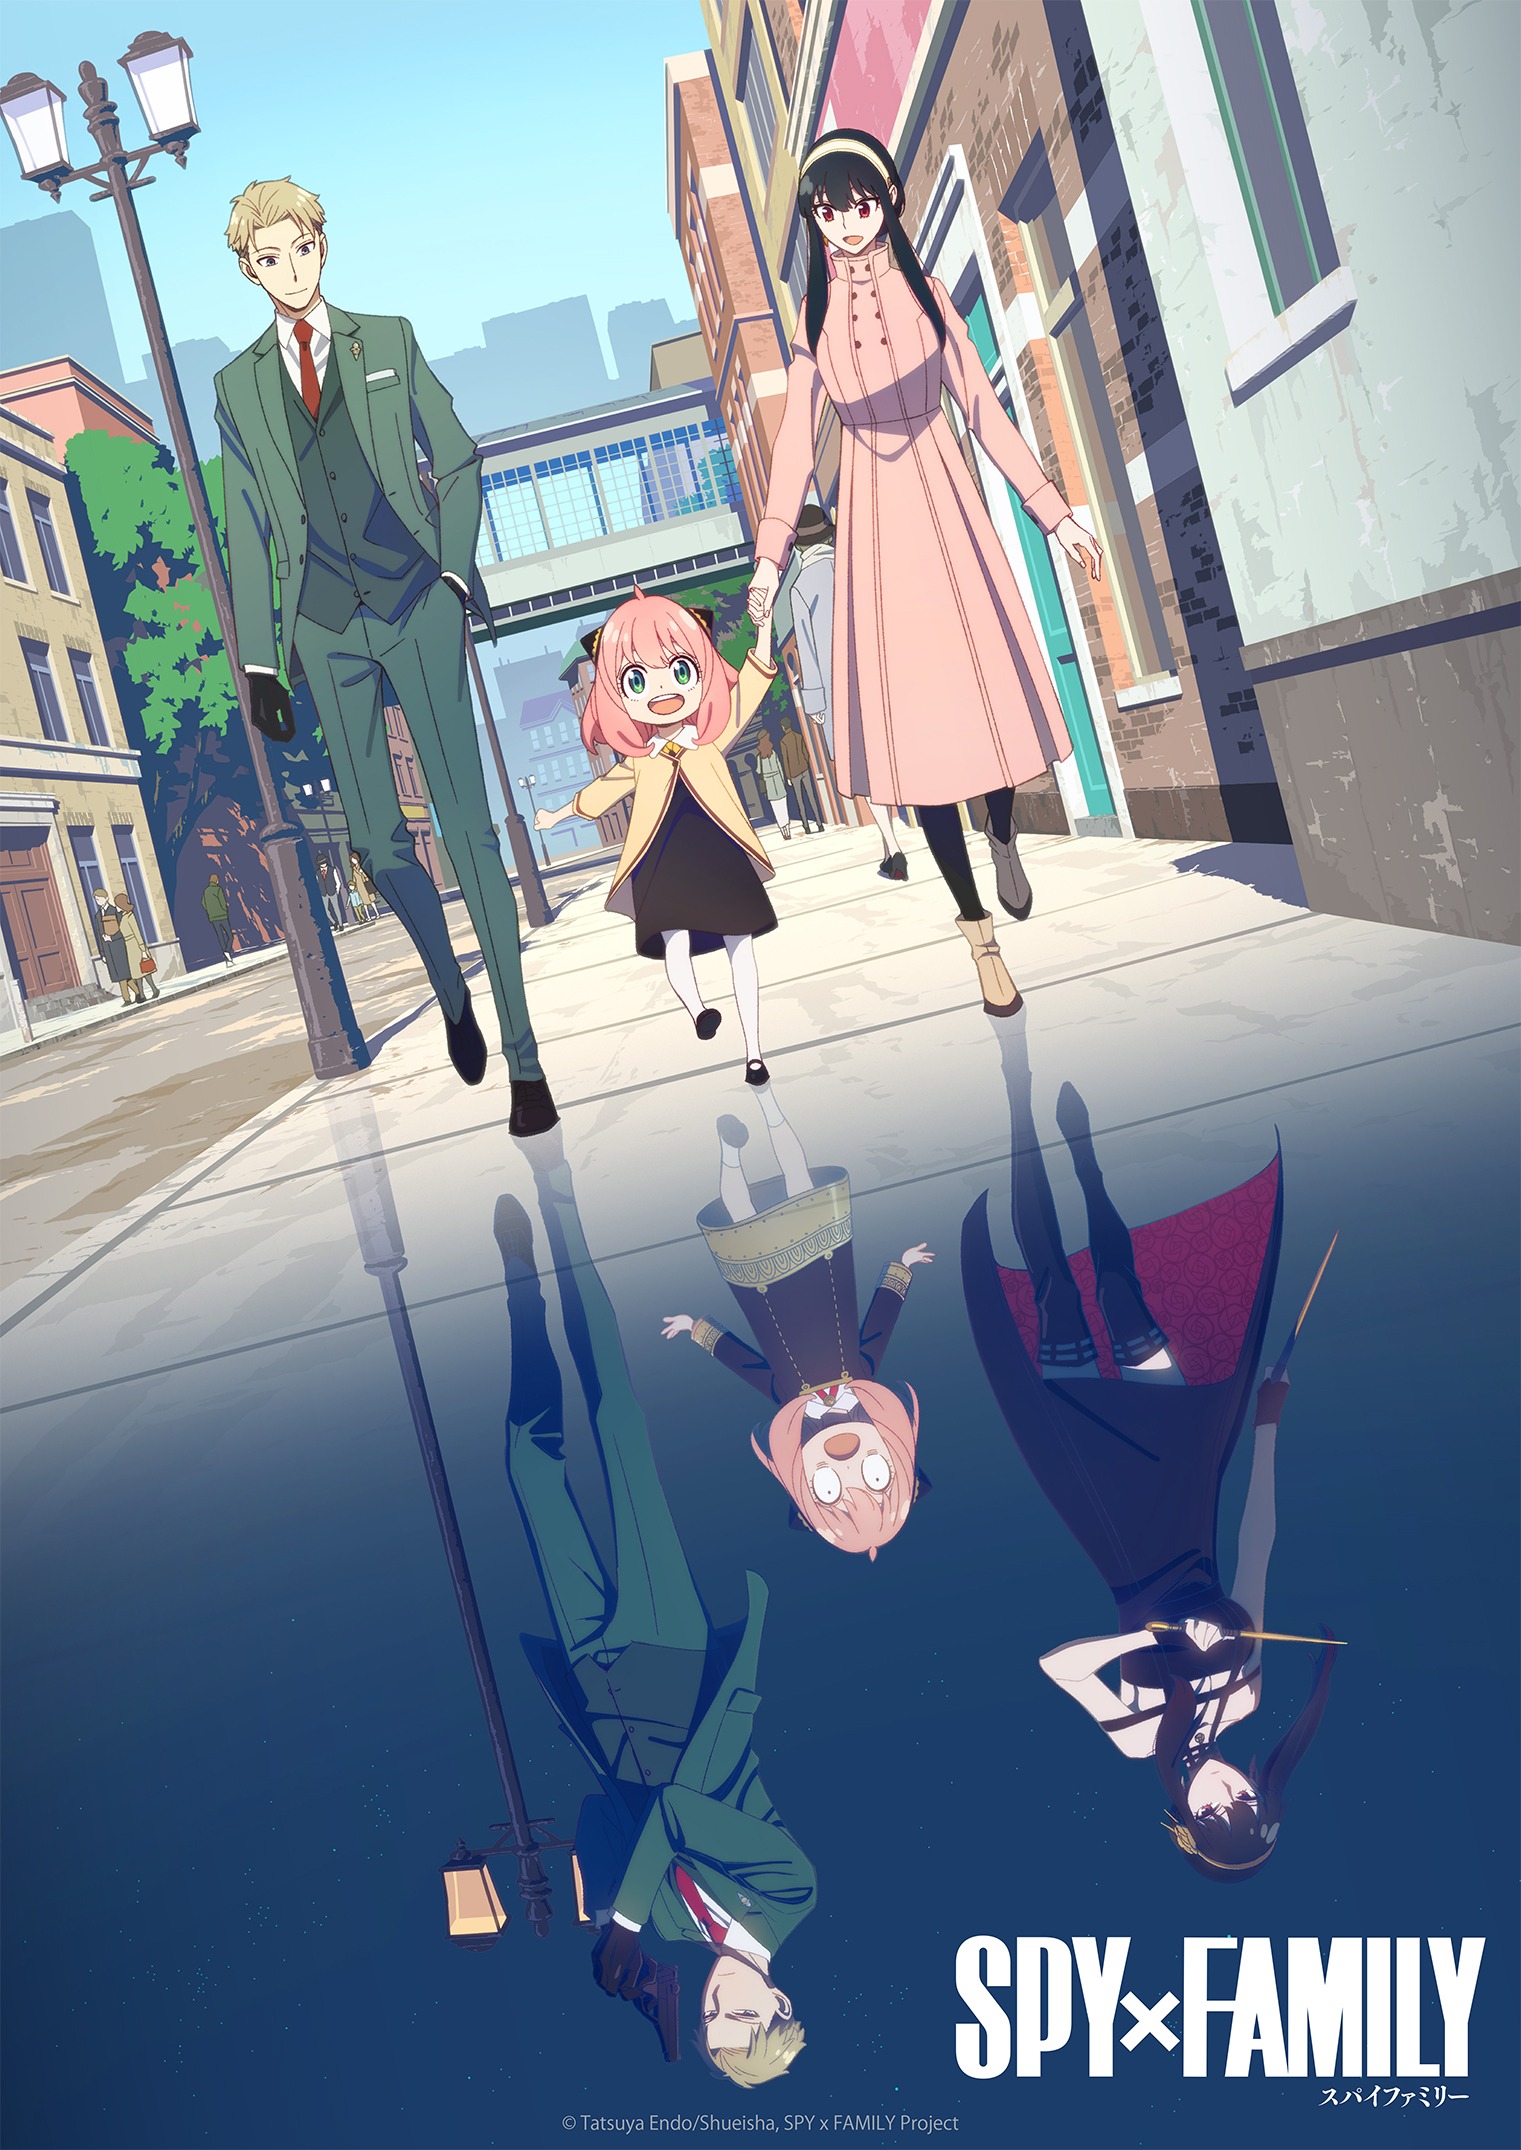 Crunchyroll on X: NEWS: THE PROMISED NEVERLAND Season 2 TV Anime